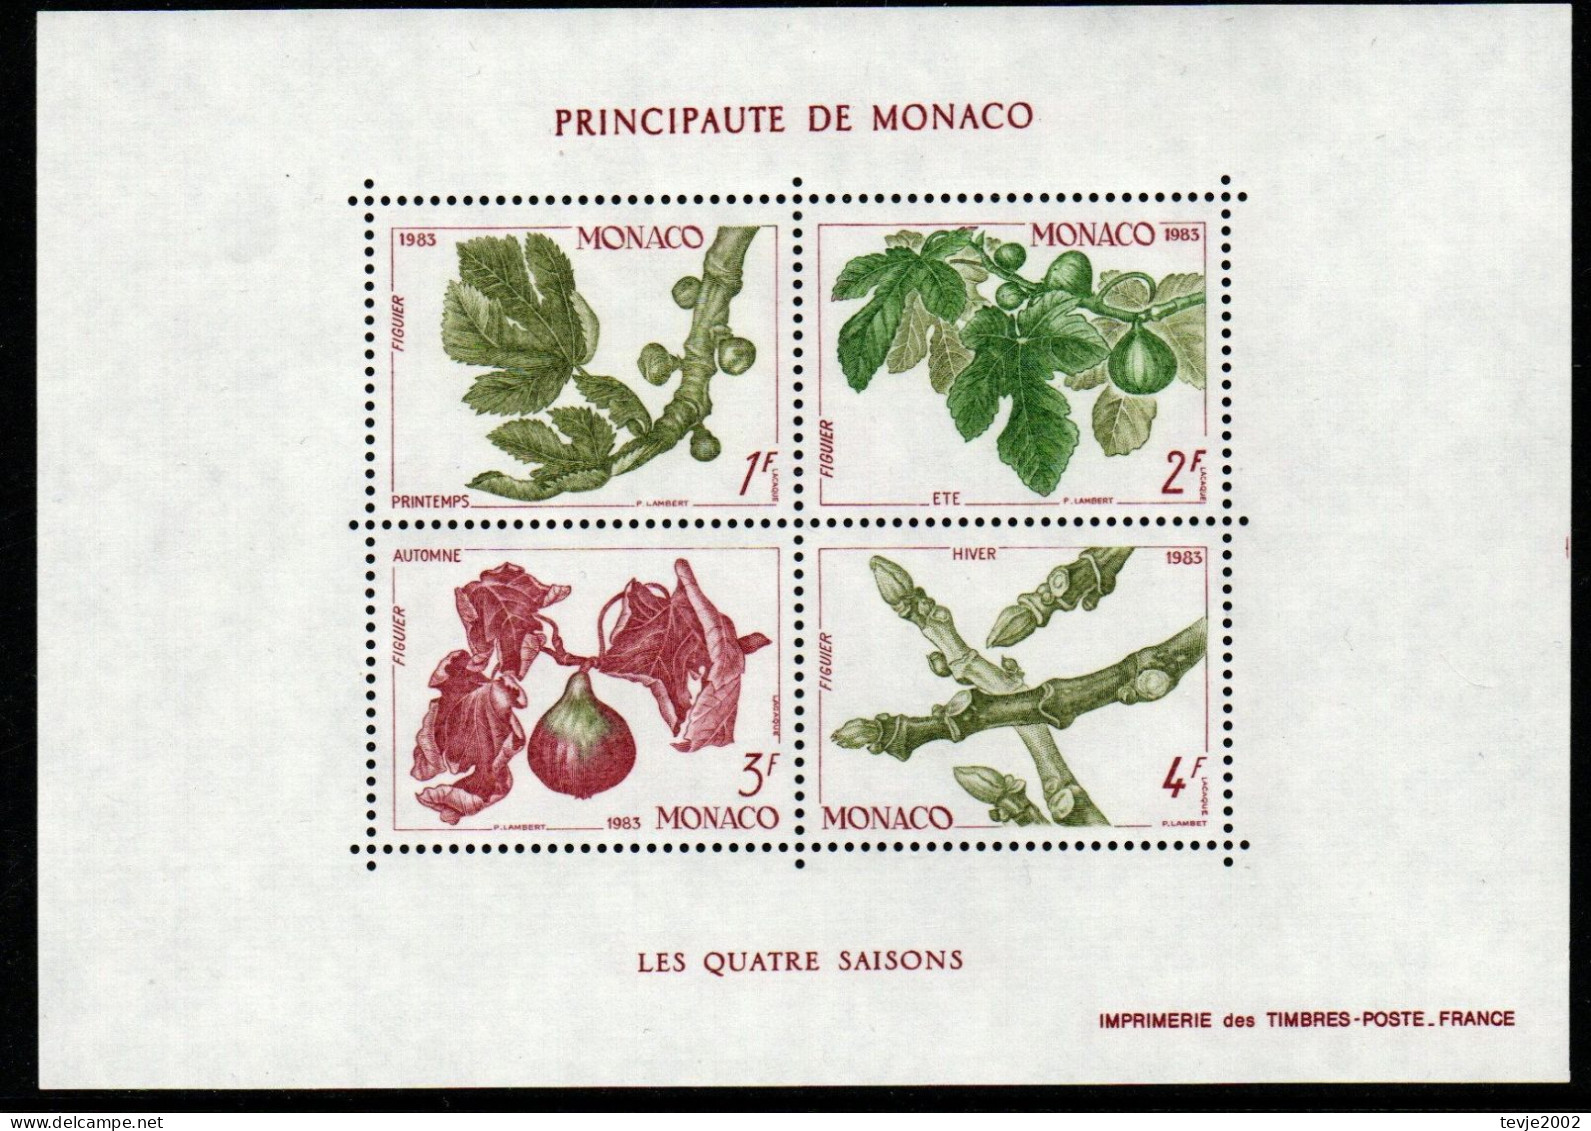 Monaco 1983 - Mi.Nr. Block 24 - Postfrisch MNH - Bäume Trees Feigen Früchte Fruits - Arbres